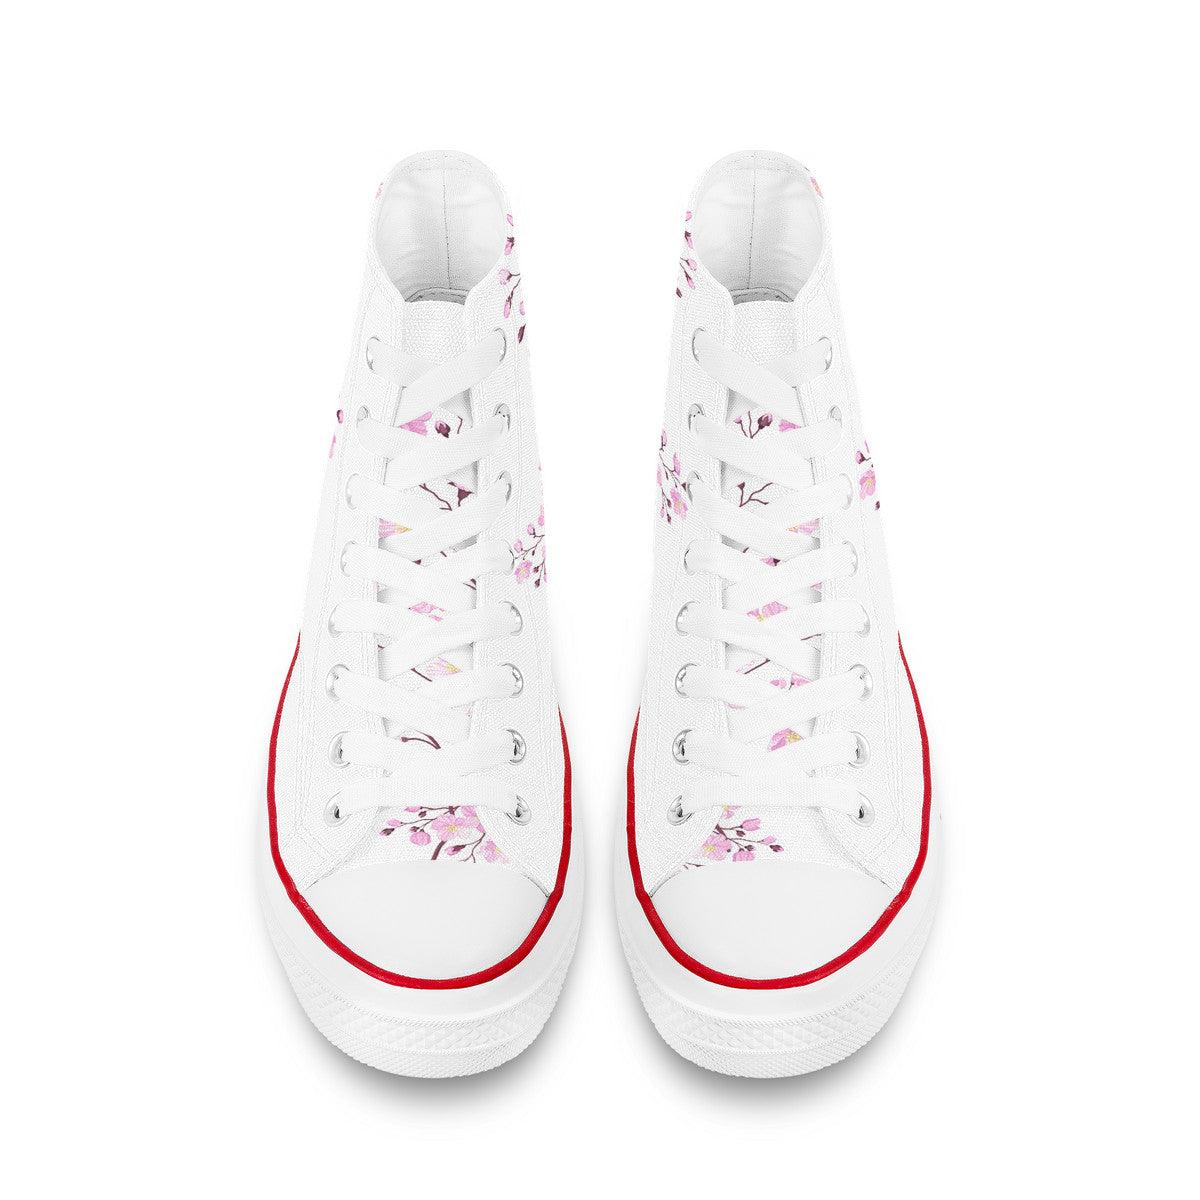 Sakura on White - High Top Canvas Shoes